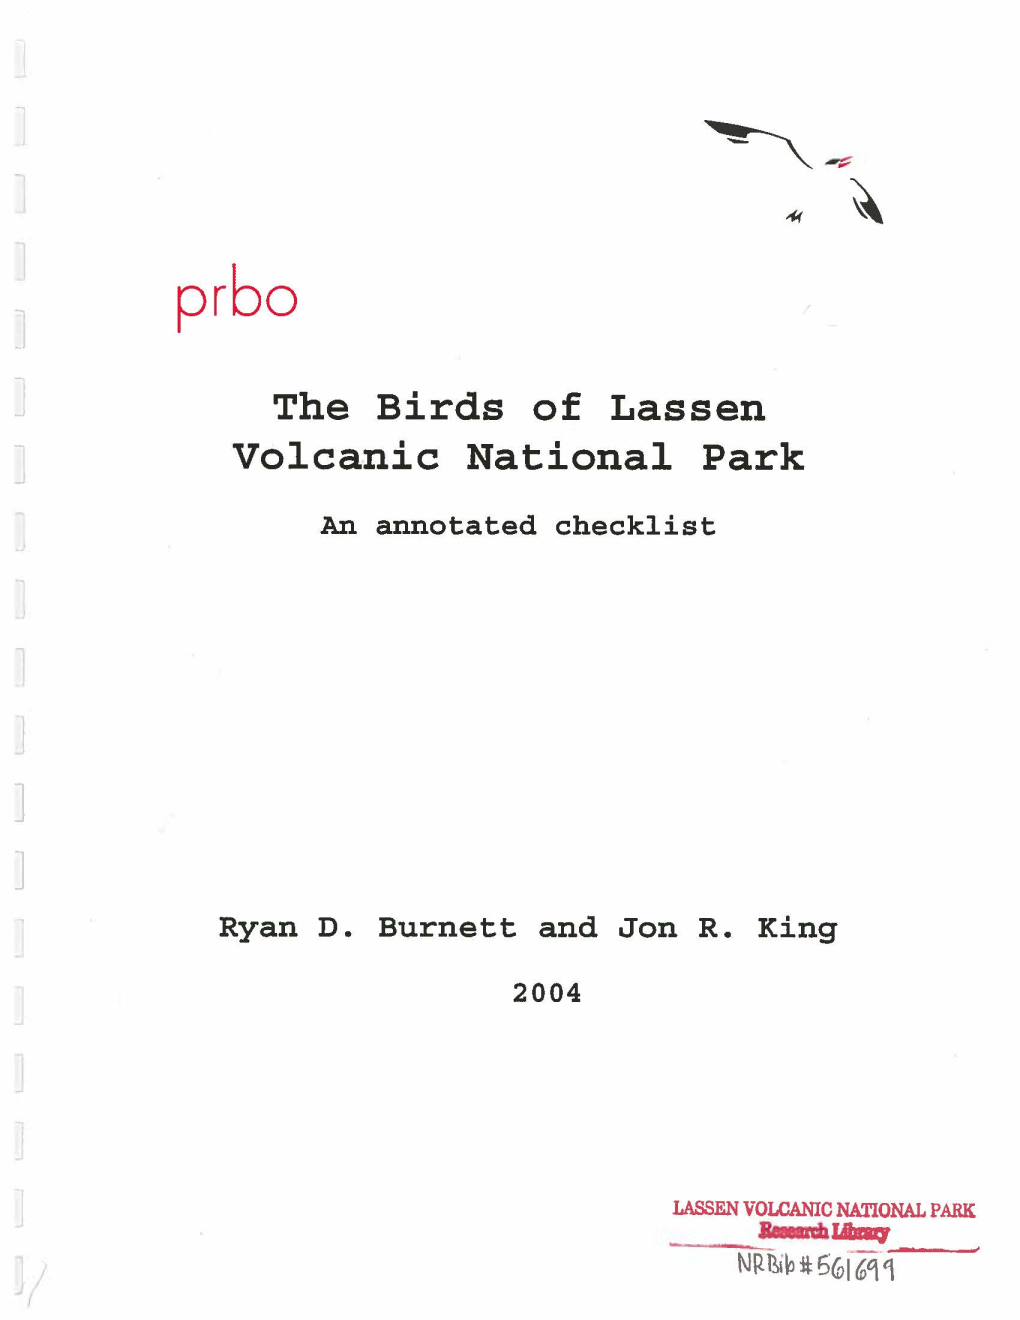 The Birds of Lassen Volcanic National Park